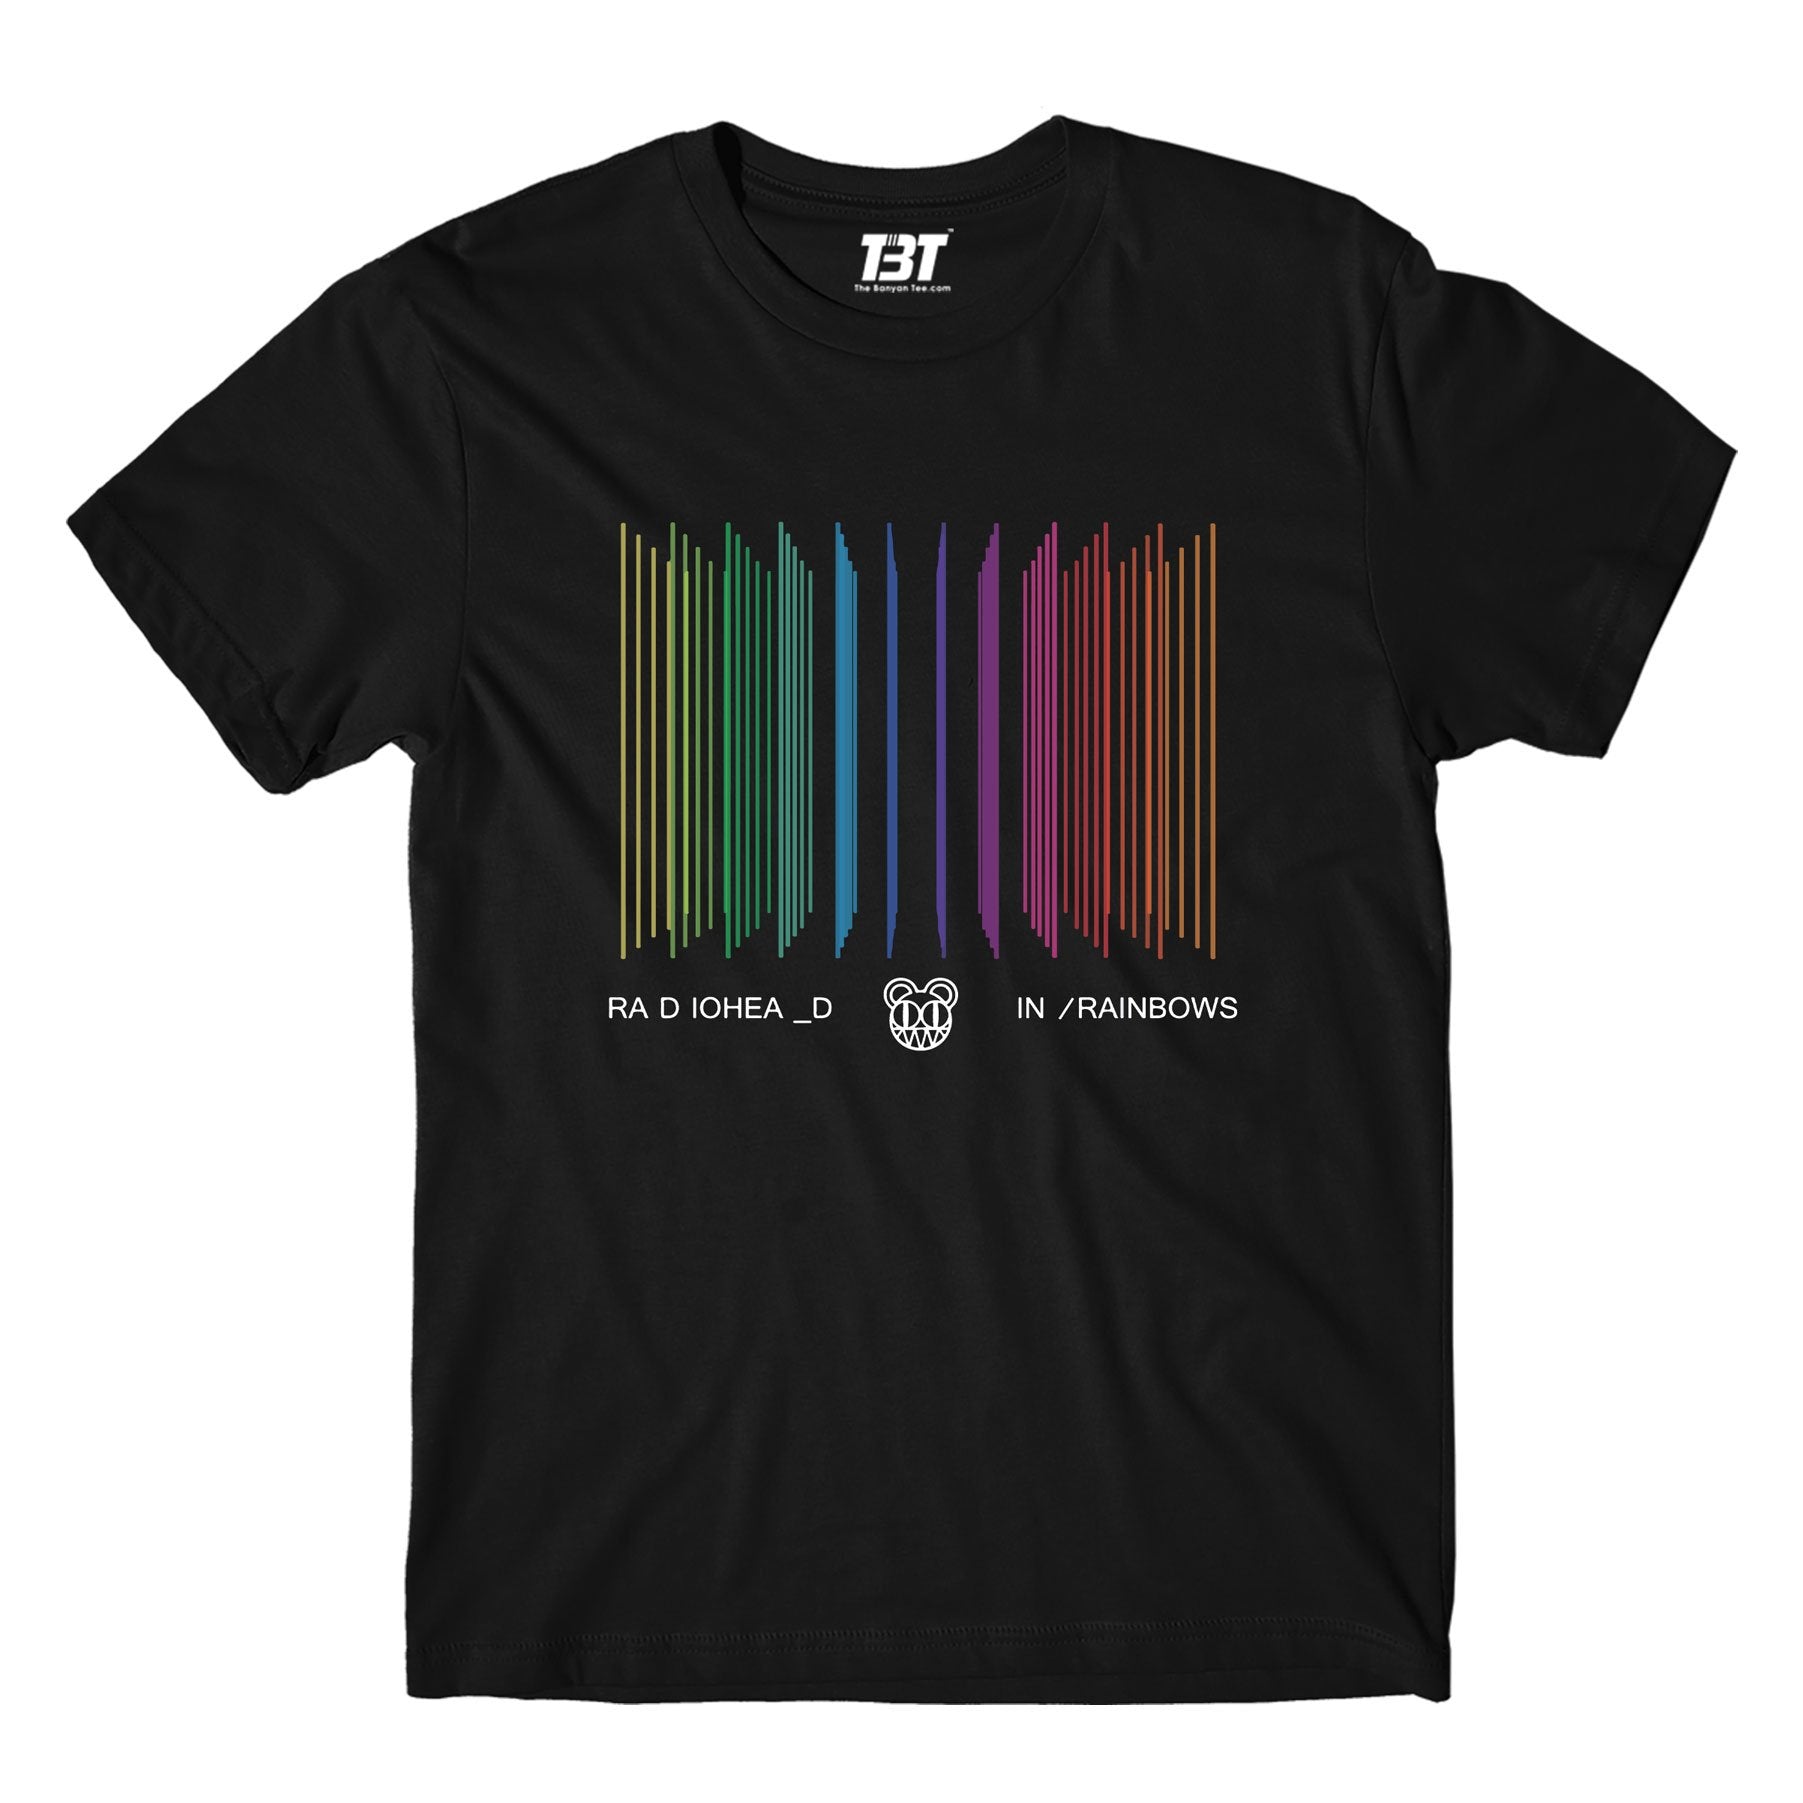 Radiohead T-shirt - In Rainbows T-shirt The Banyan Tee TBT